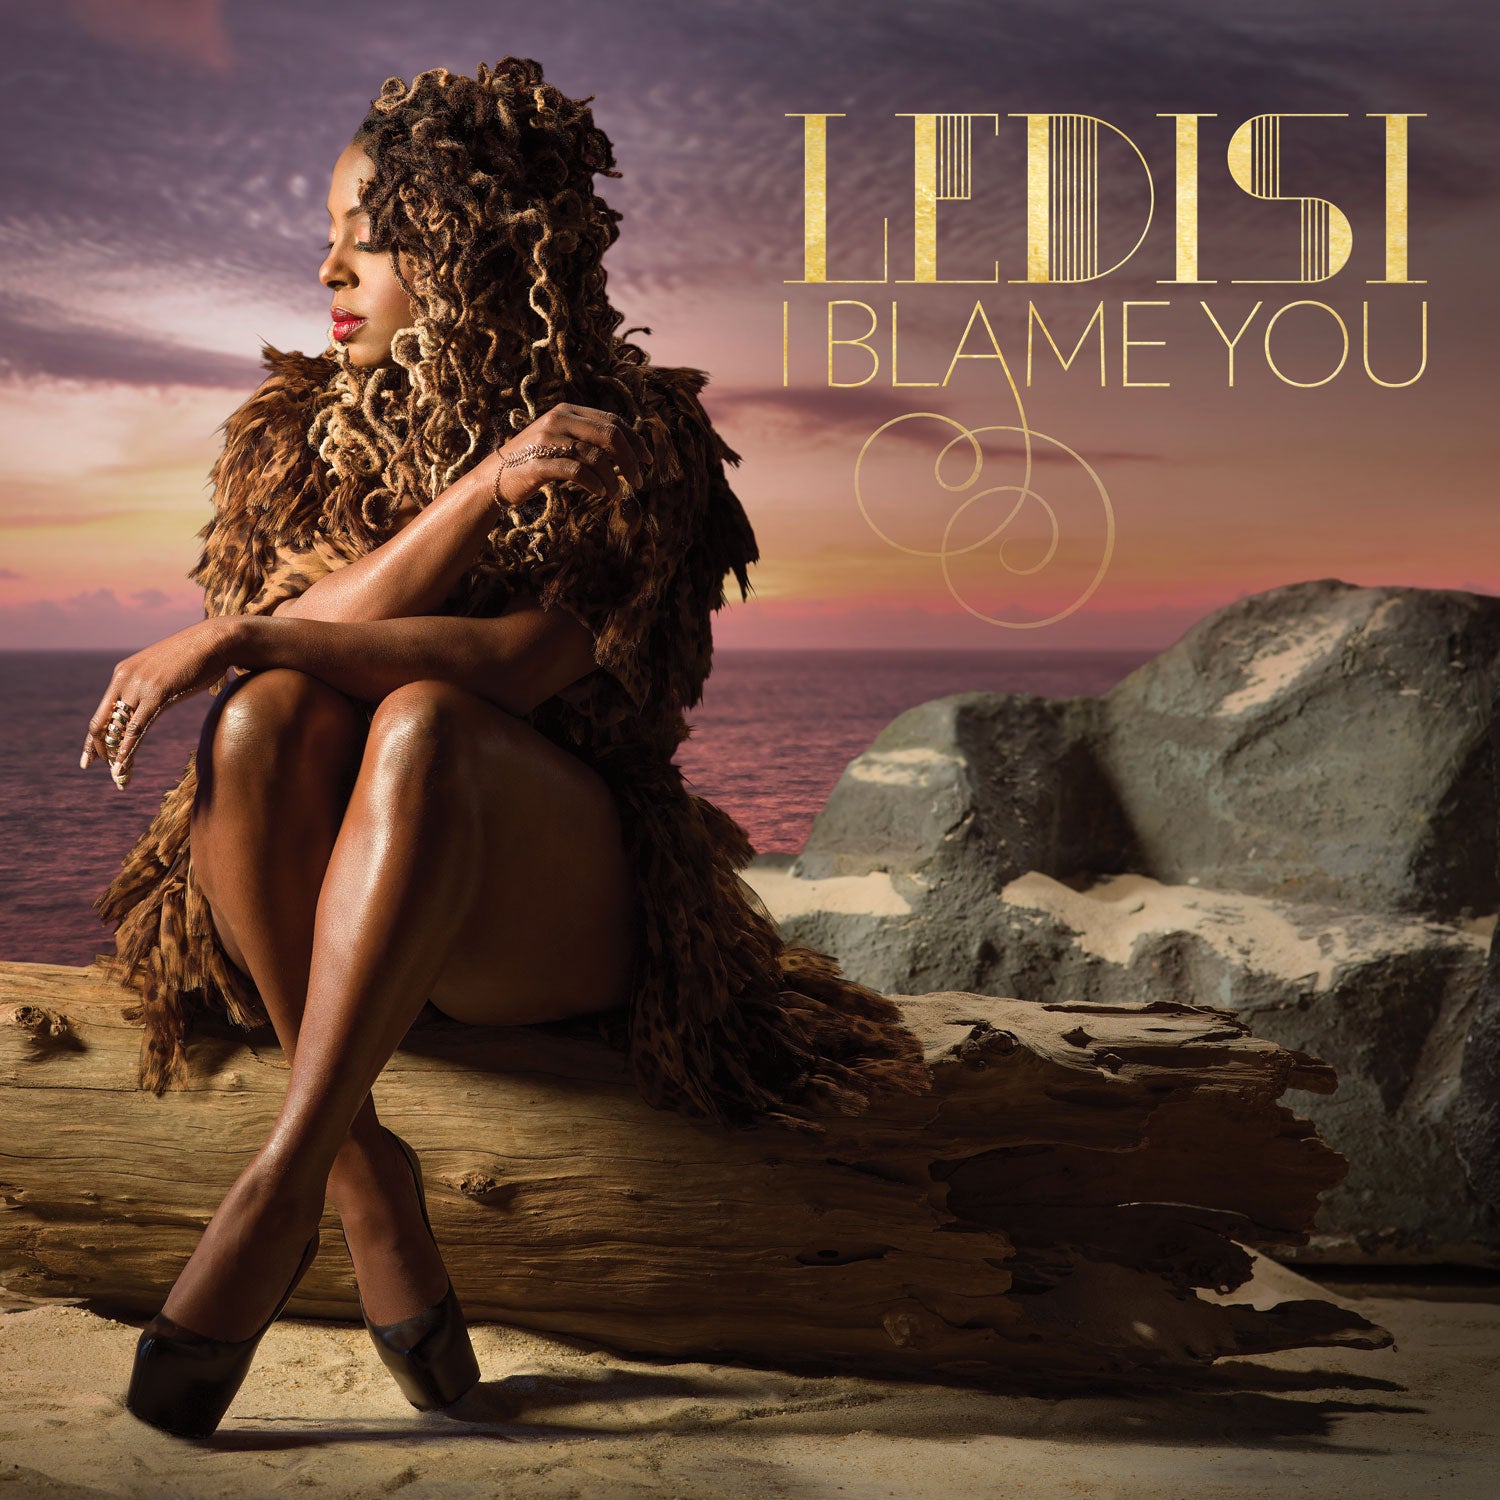 EXCLUSIVE: Hear Ledisi's New Single 'I Blame You'